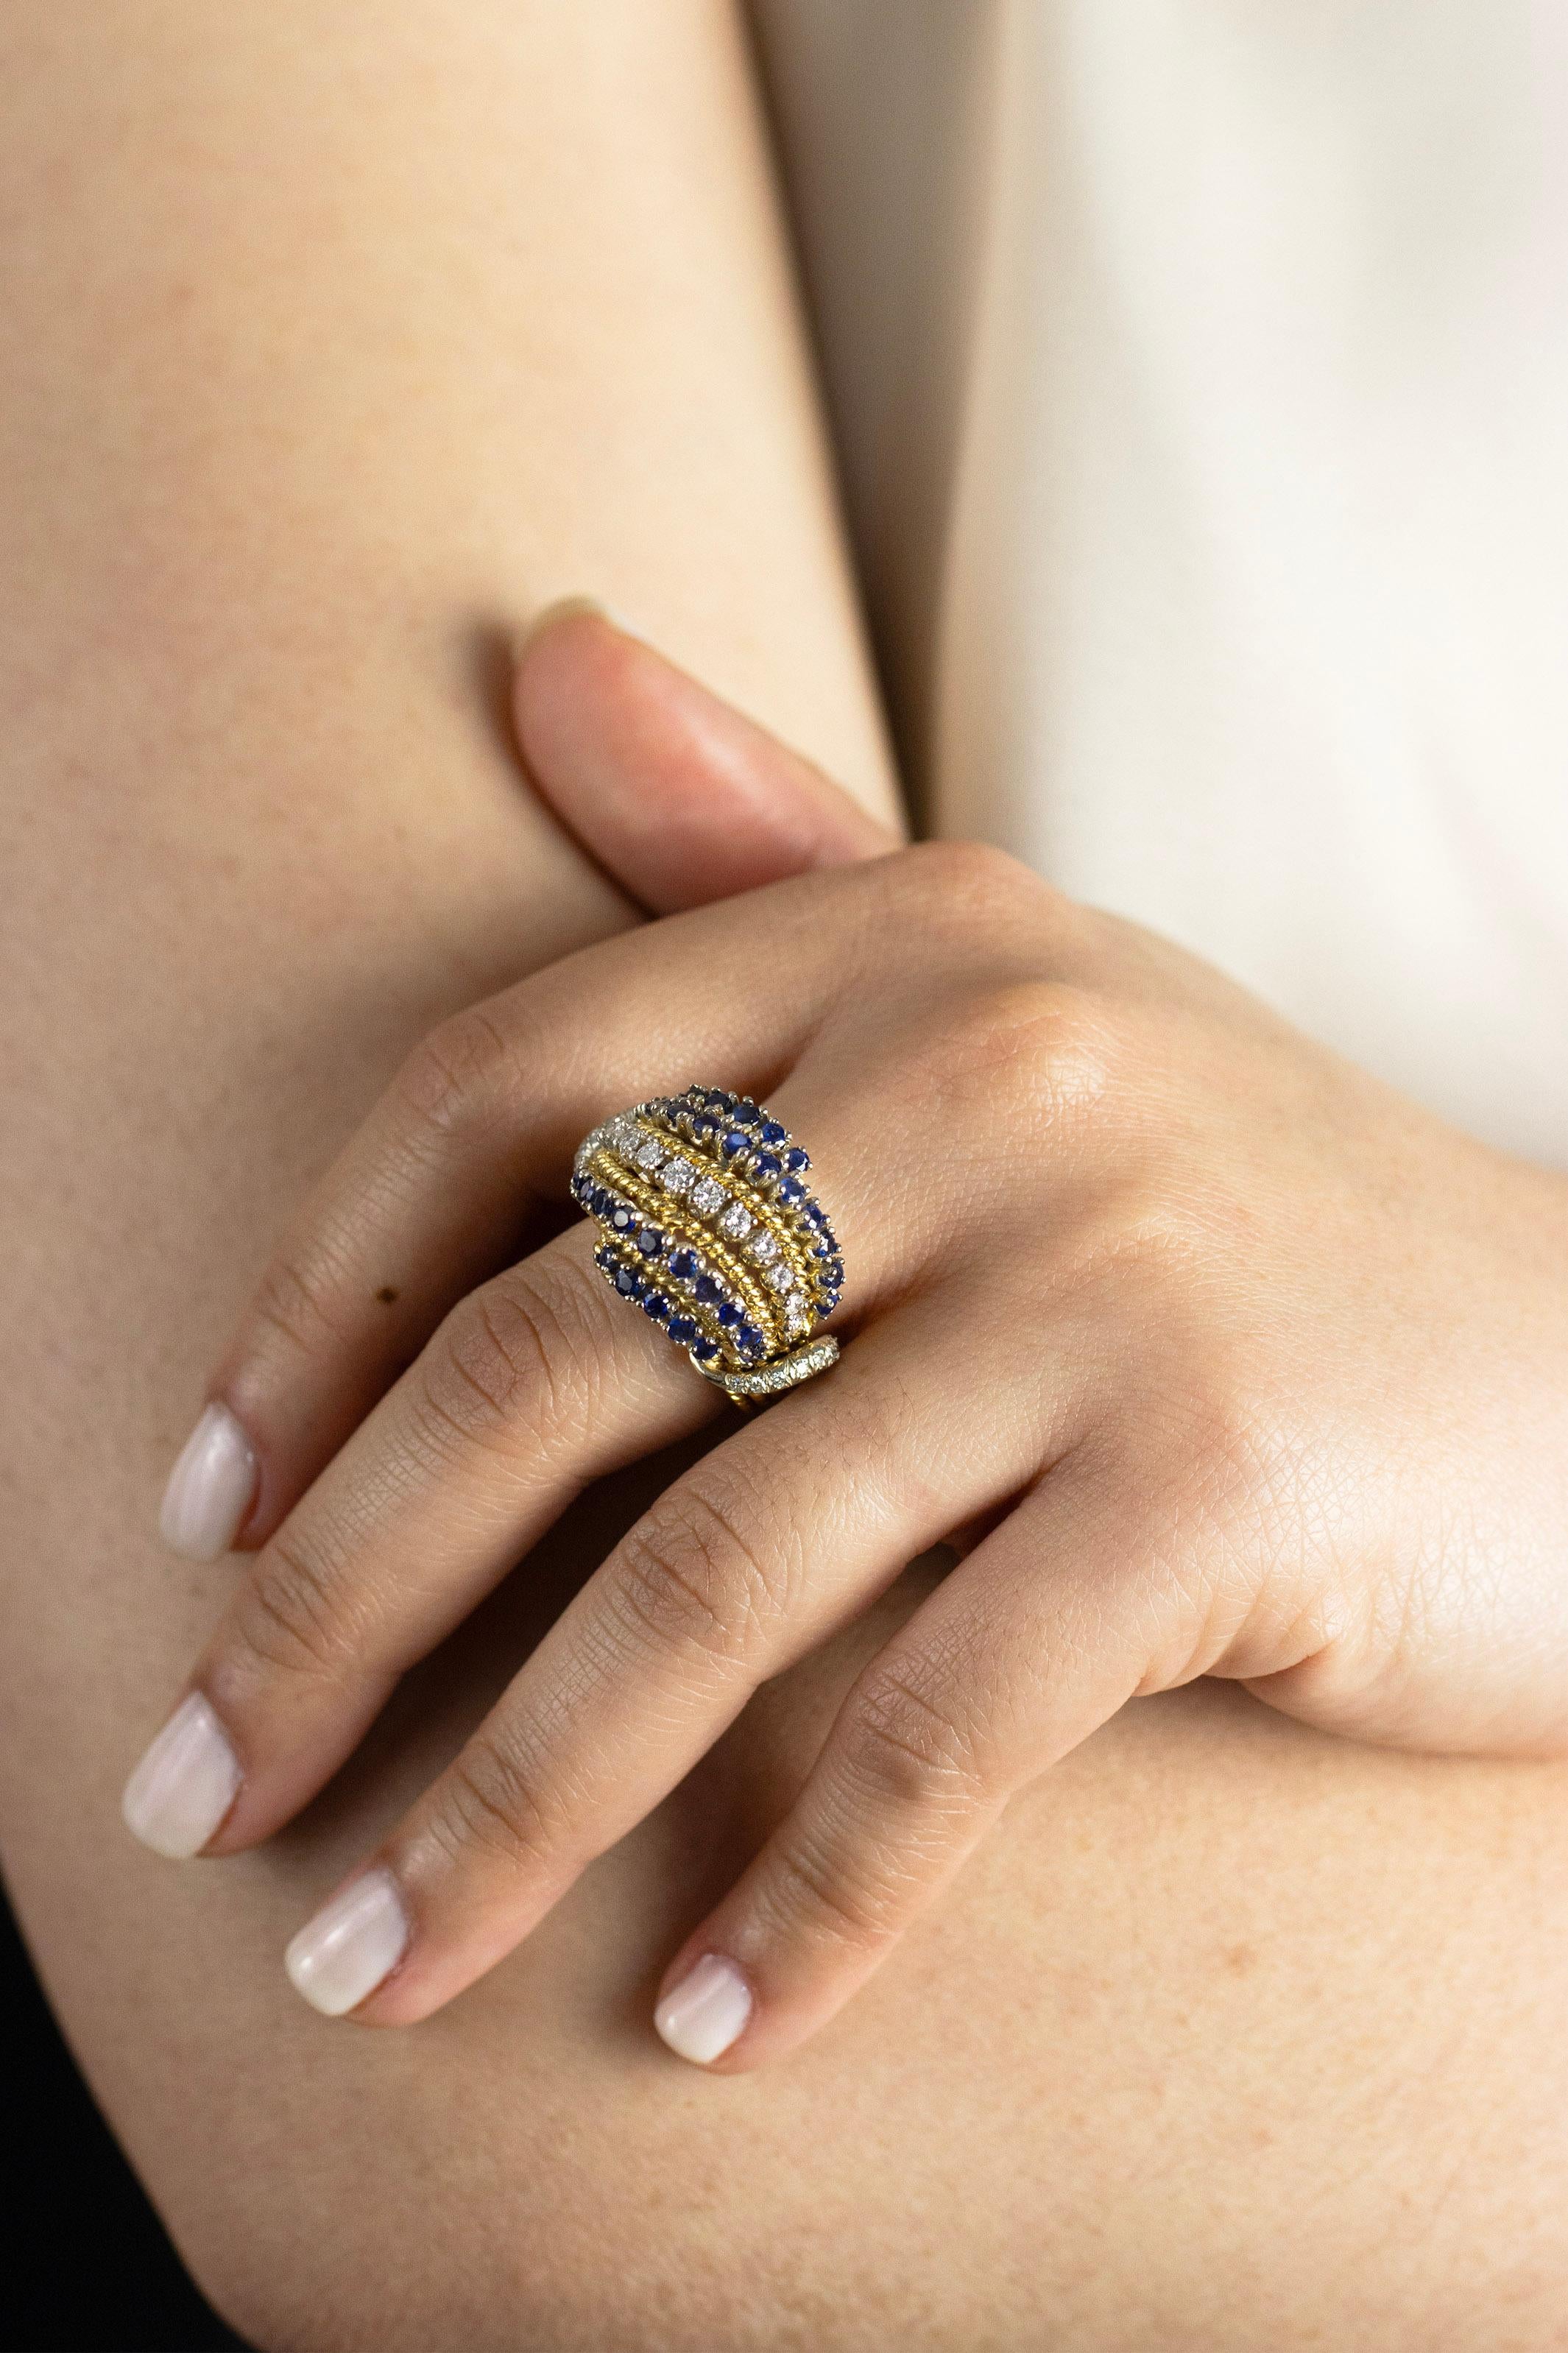 sapphire and diamond twist ring